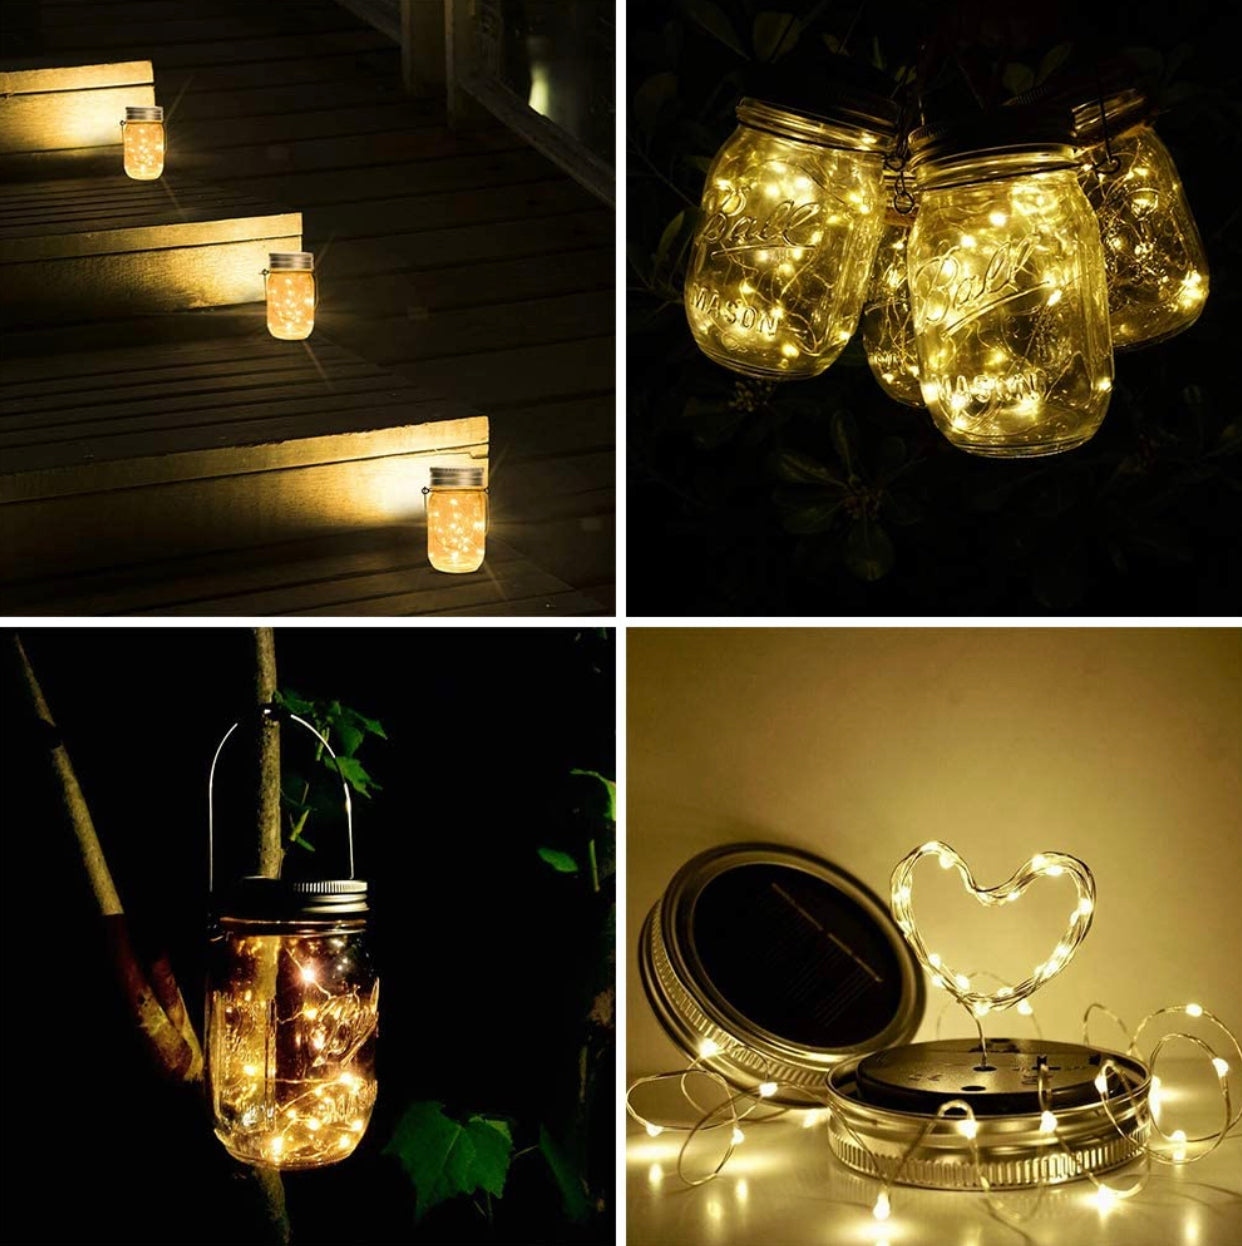 Davinci Solar Mason Jar Lights [Updated], 8 Pack 20 LED Waterproof Fairy Firefly Jar Lids String Lights with Hangers